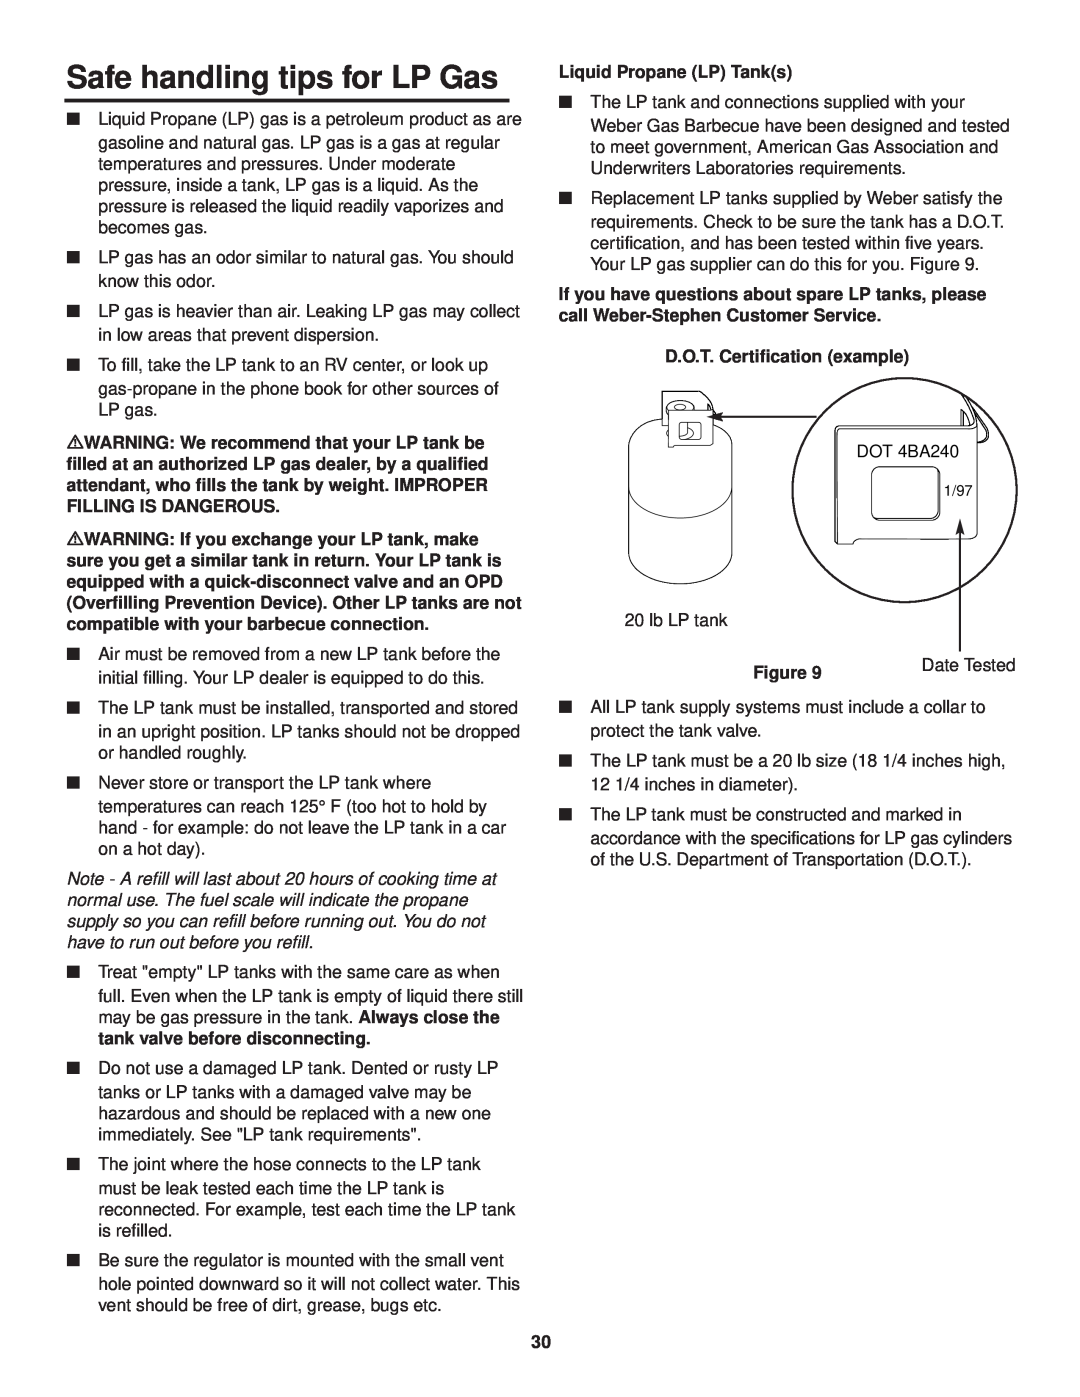 Weber 3000 owner manual Safe handling tips for LP Gas, Liquid Propane LP Tanks, D.O.T. Certification example, Date Tested 